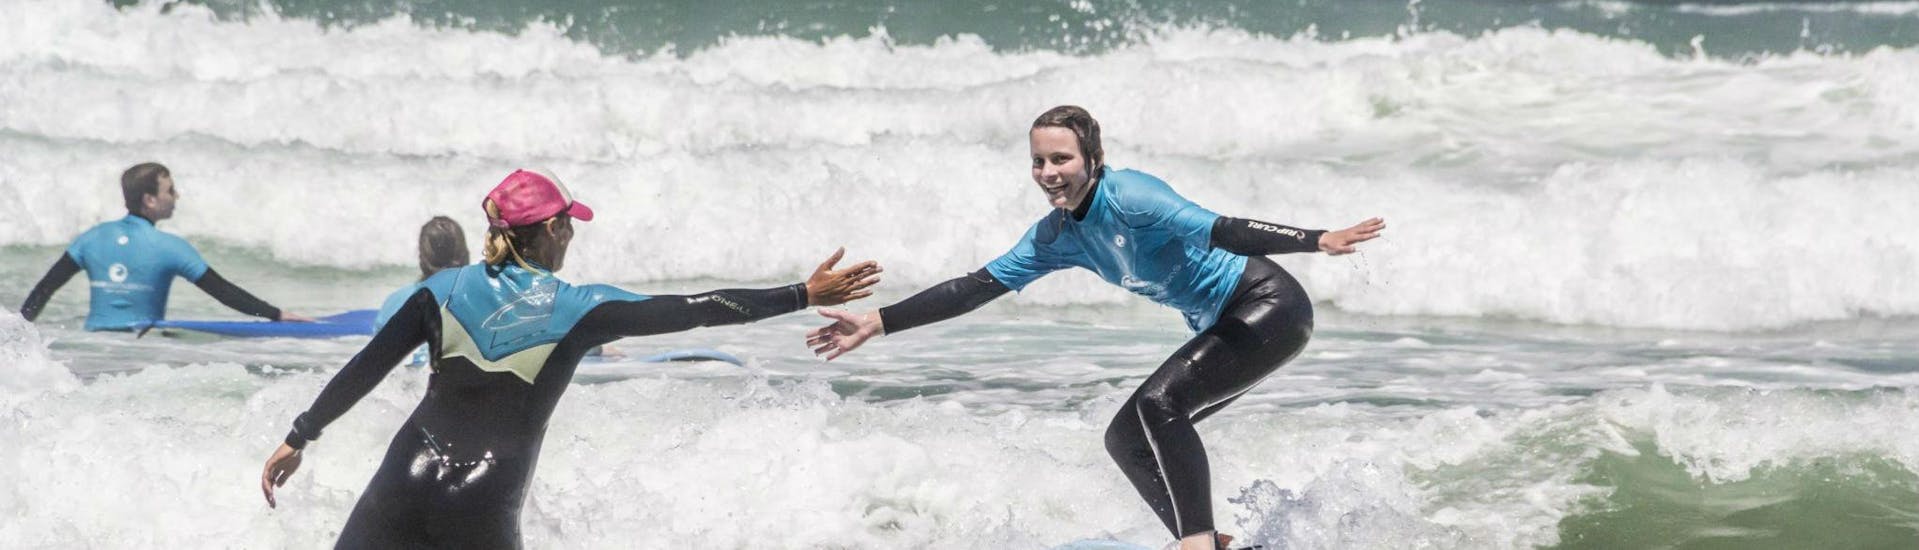 Lezioni di surf a Sagres da 12 anni per tutti i livelli.